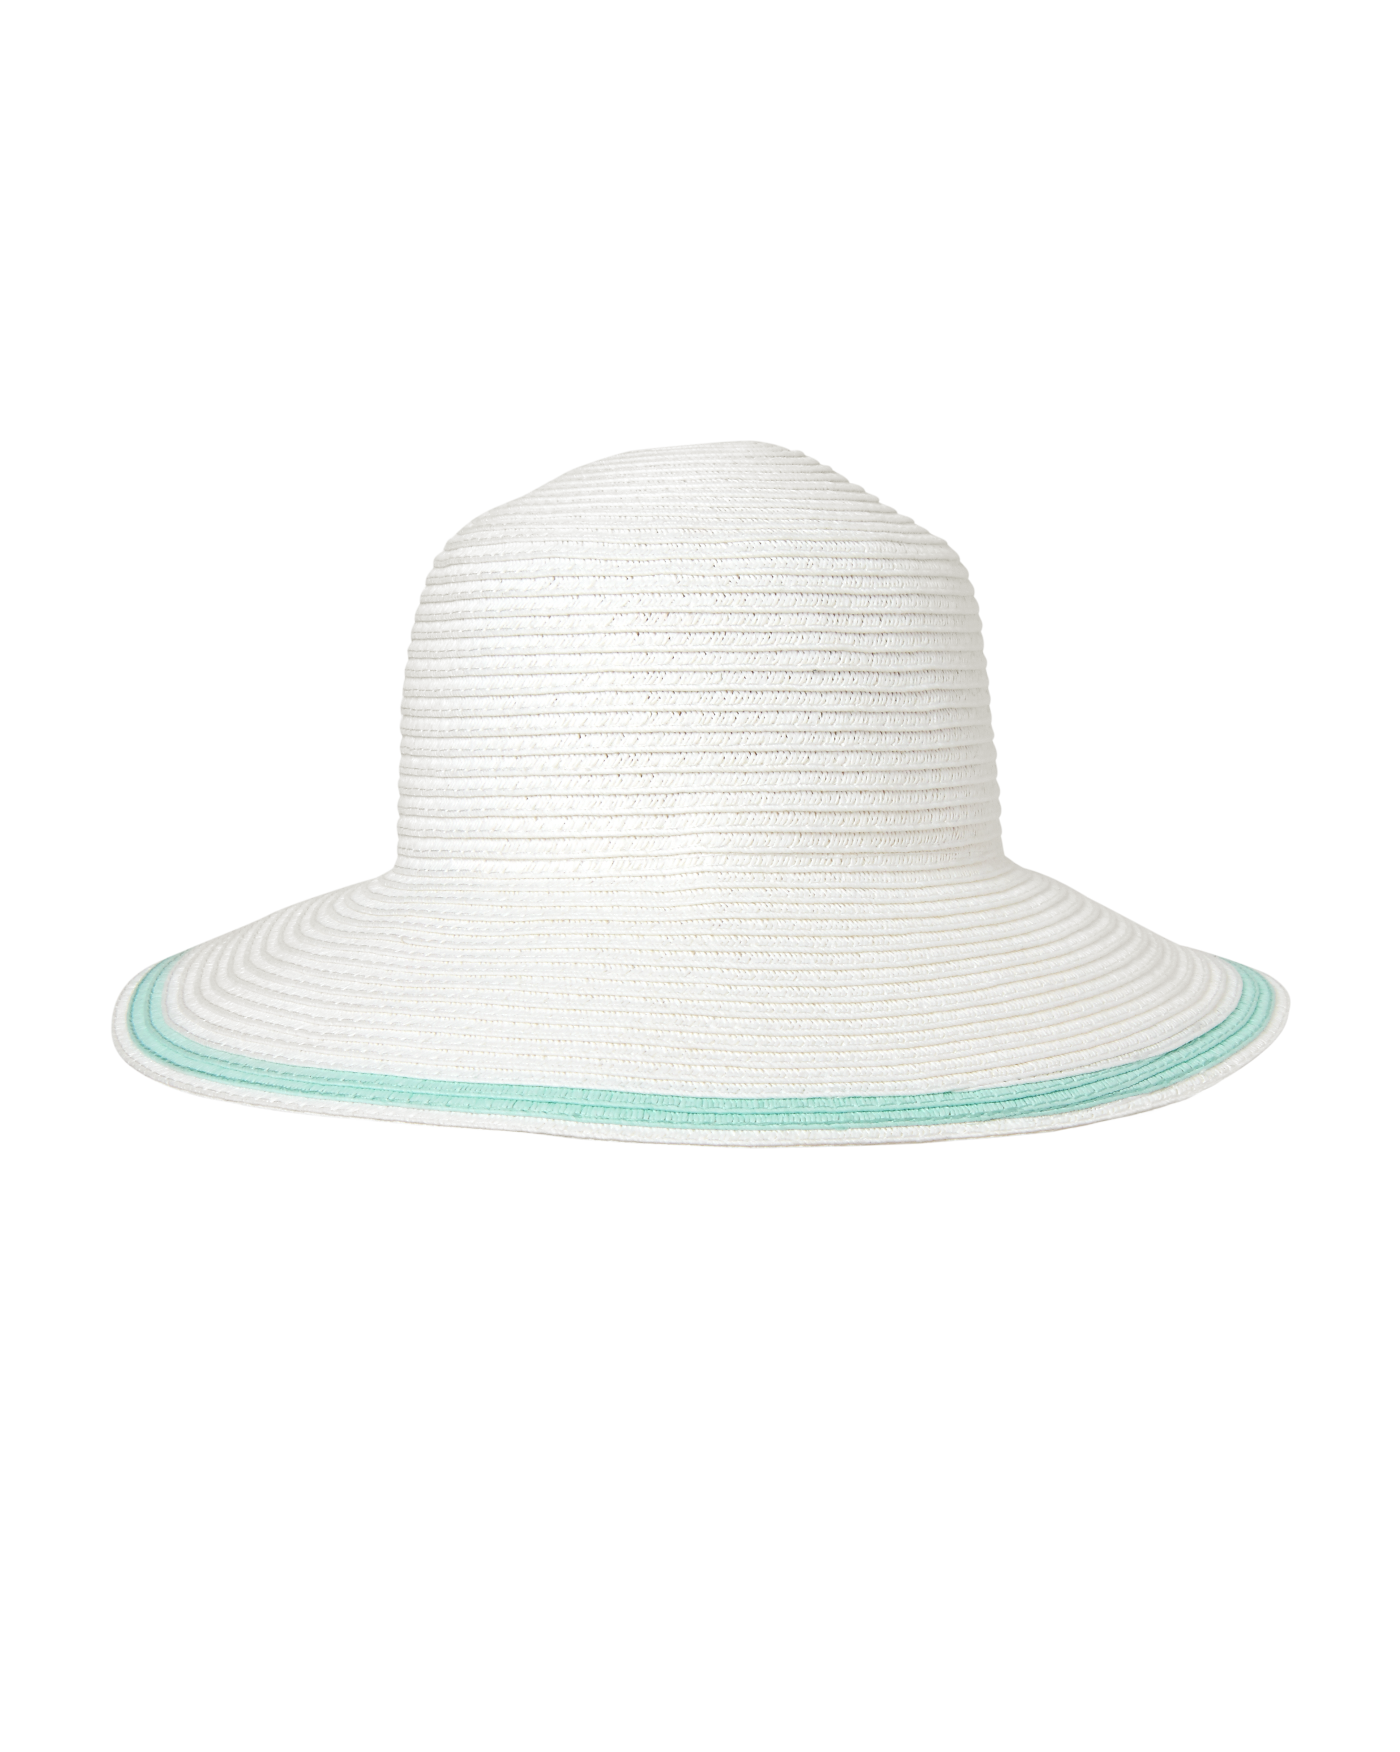 Straw Sun Hat image number 0